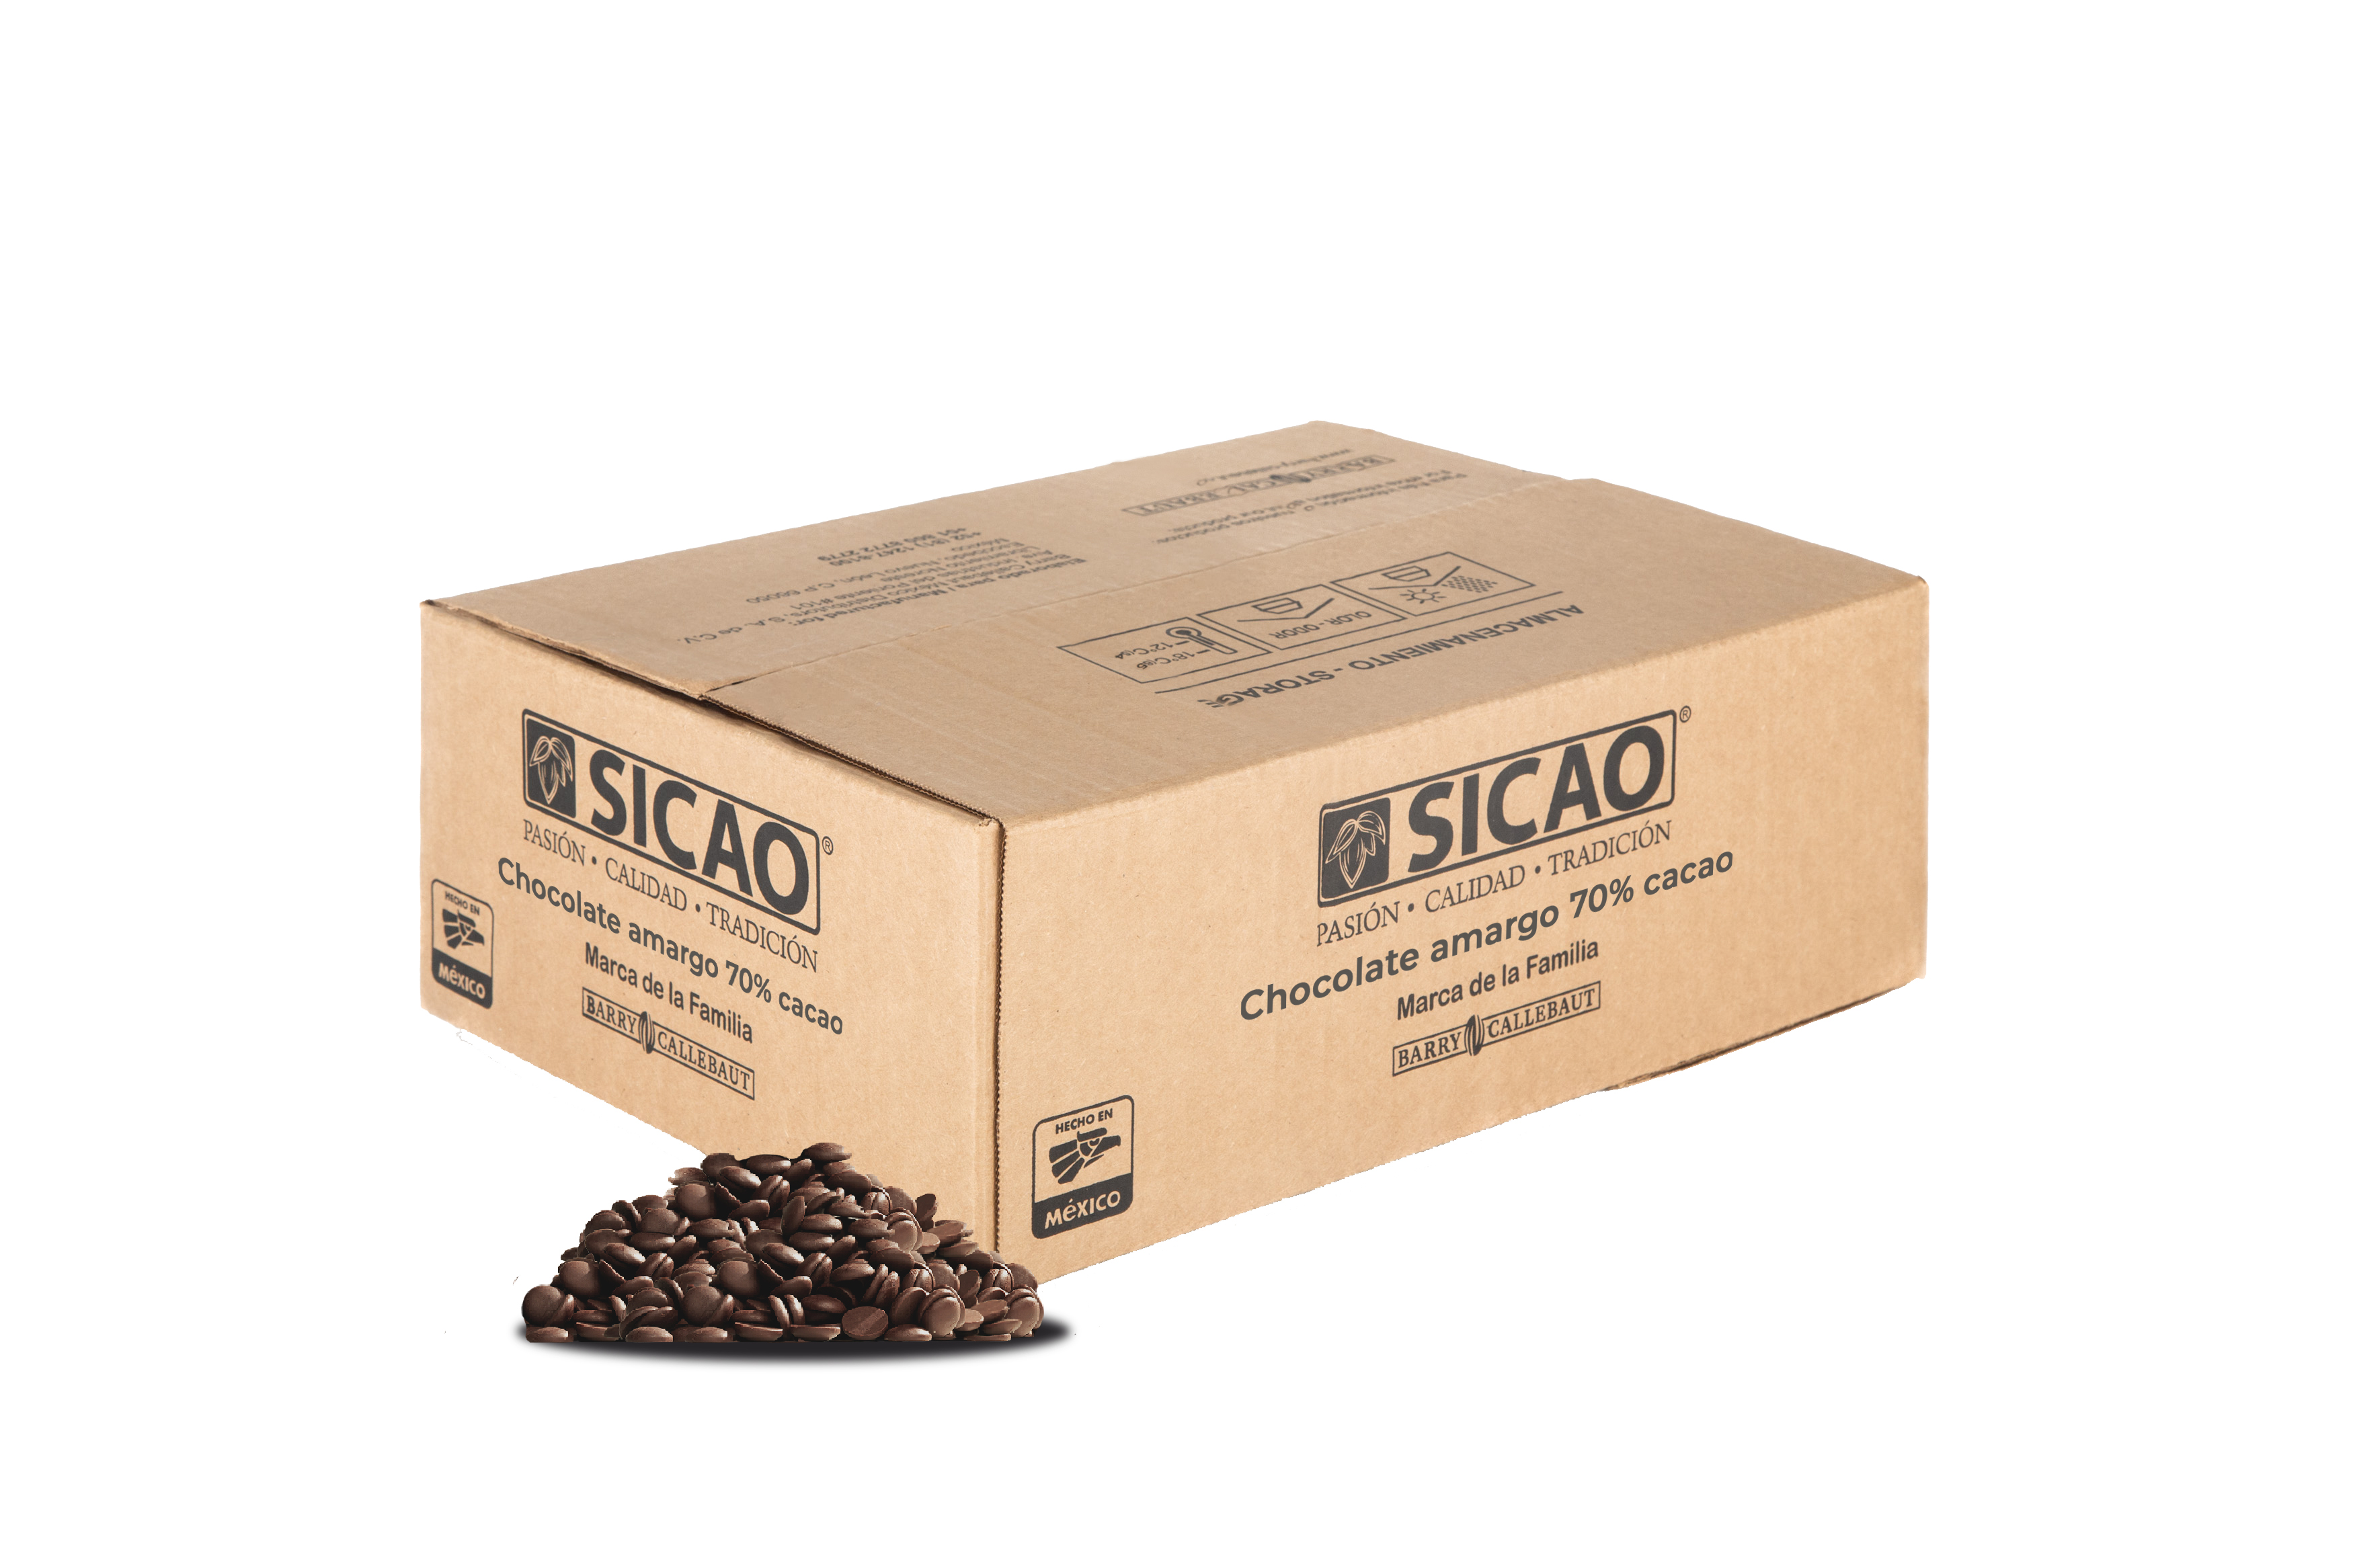 Chocolate - Chocolate amargo - 70% Cacao - Wafers - Caja 10 kg (1)